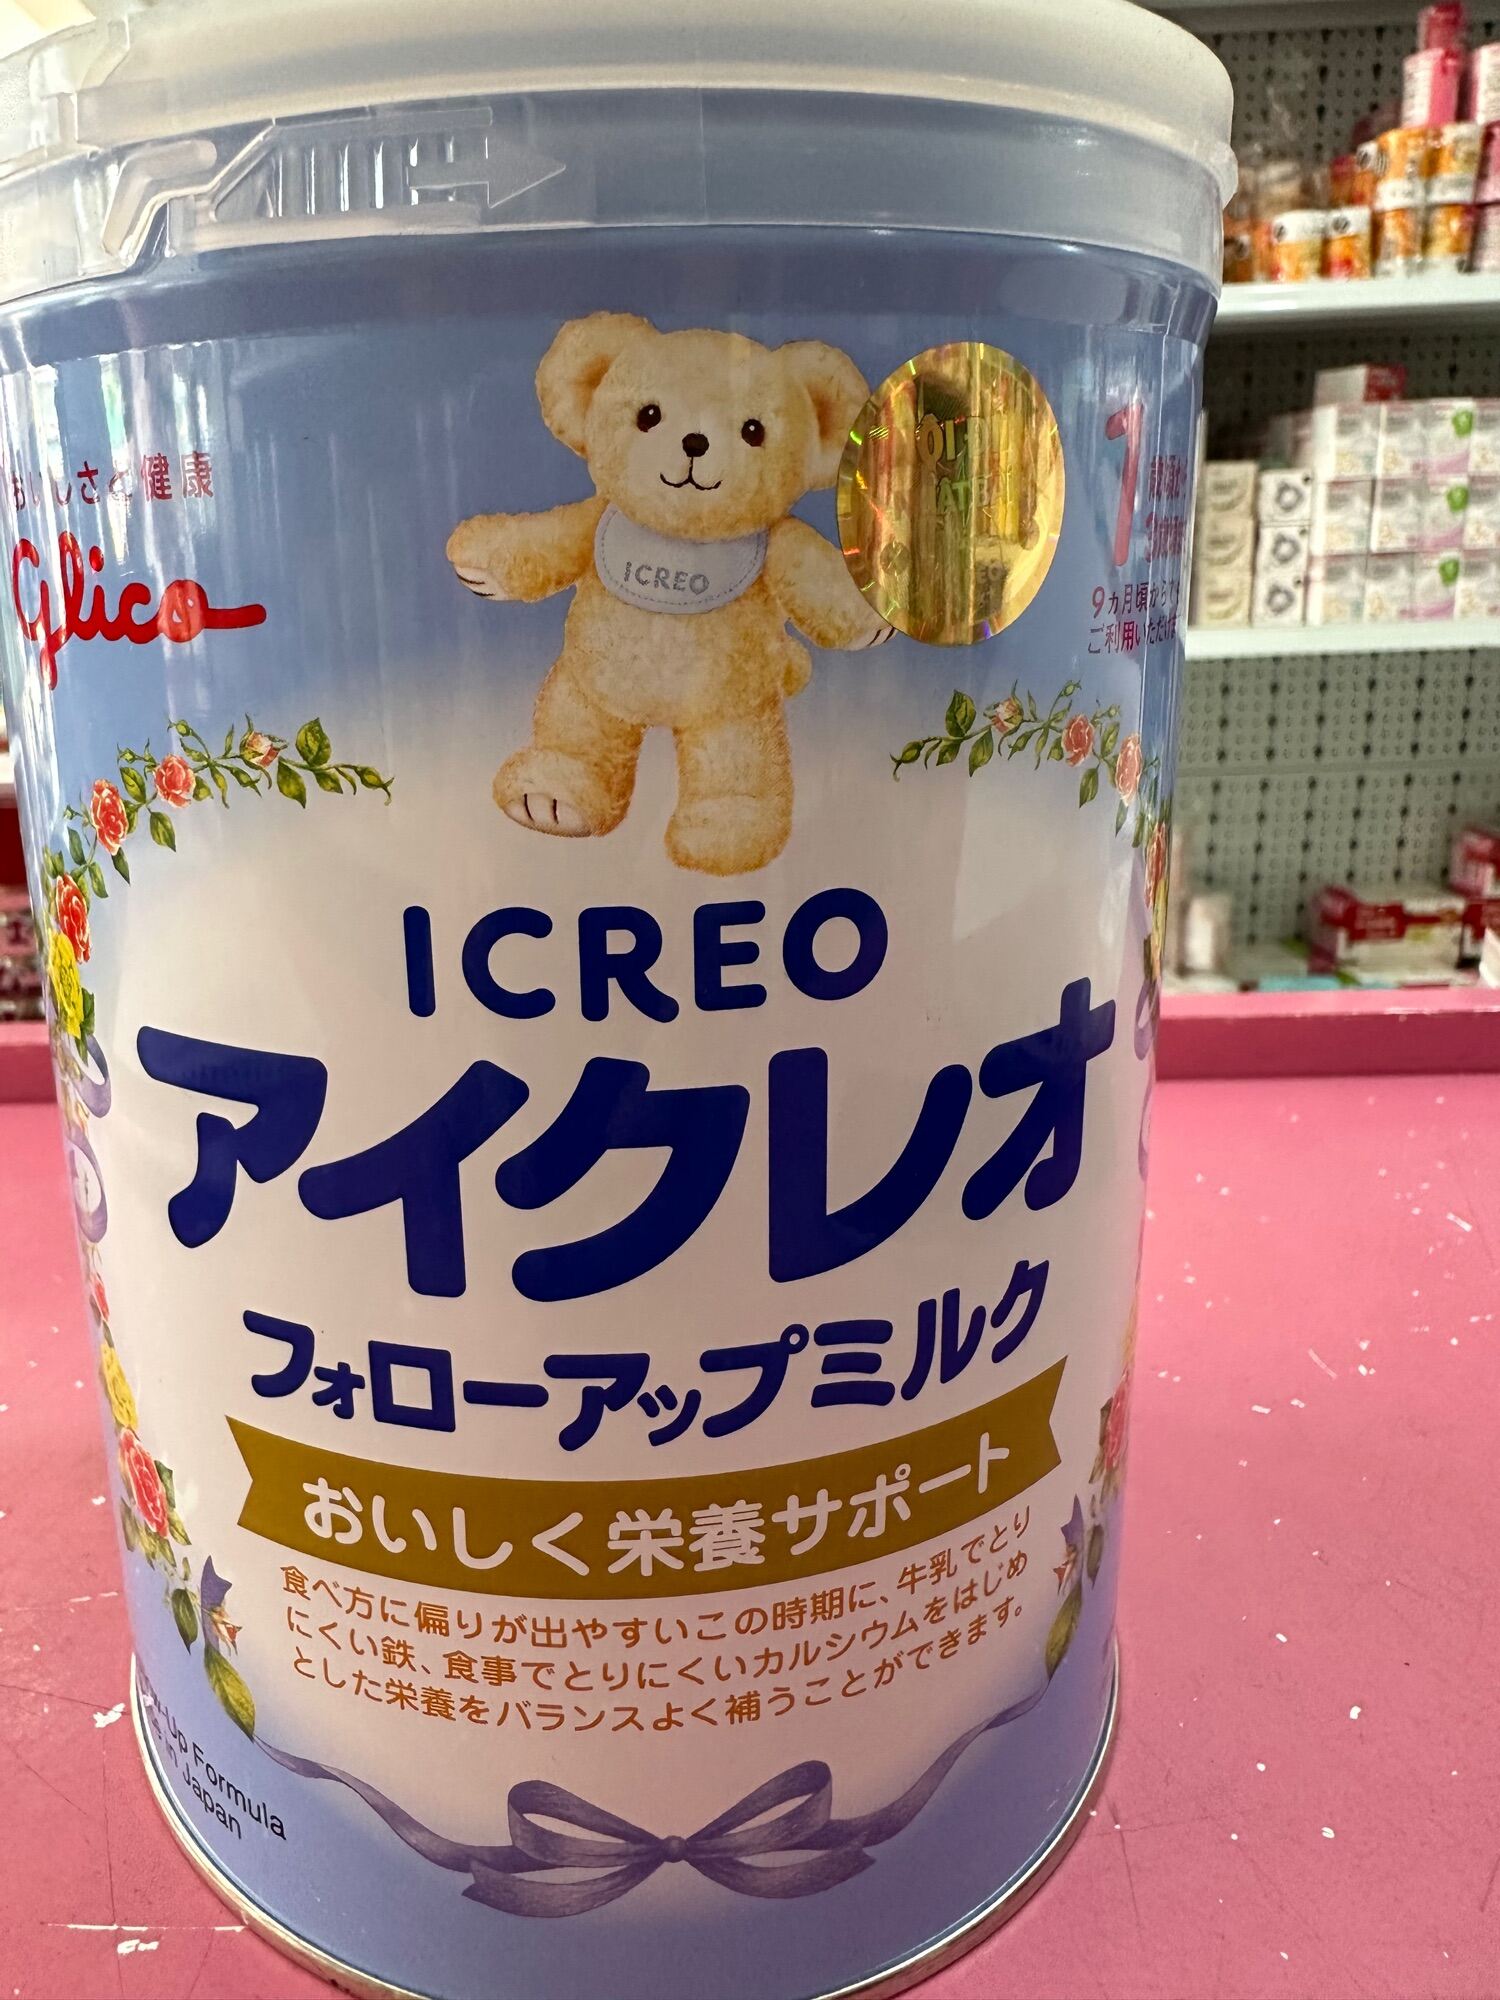 Sữa bột Glico Icreo số 1 820g (date 10/23)